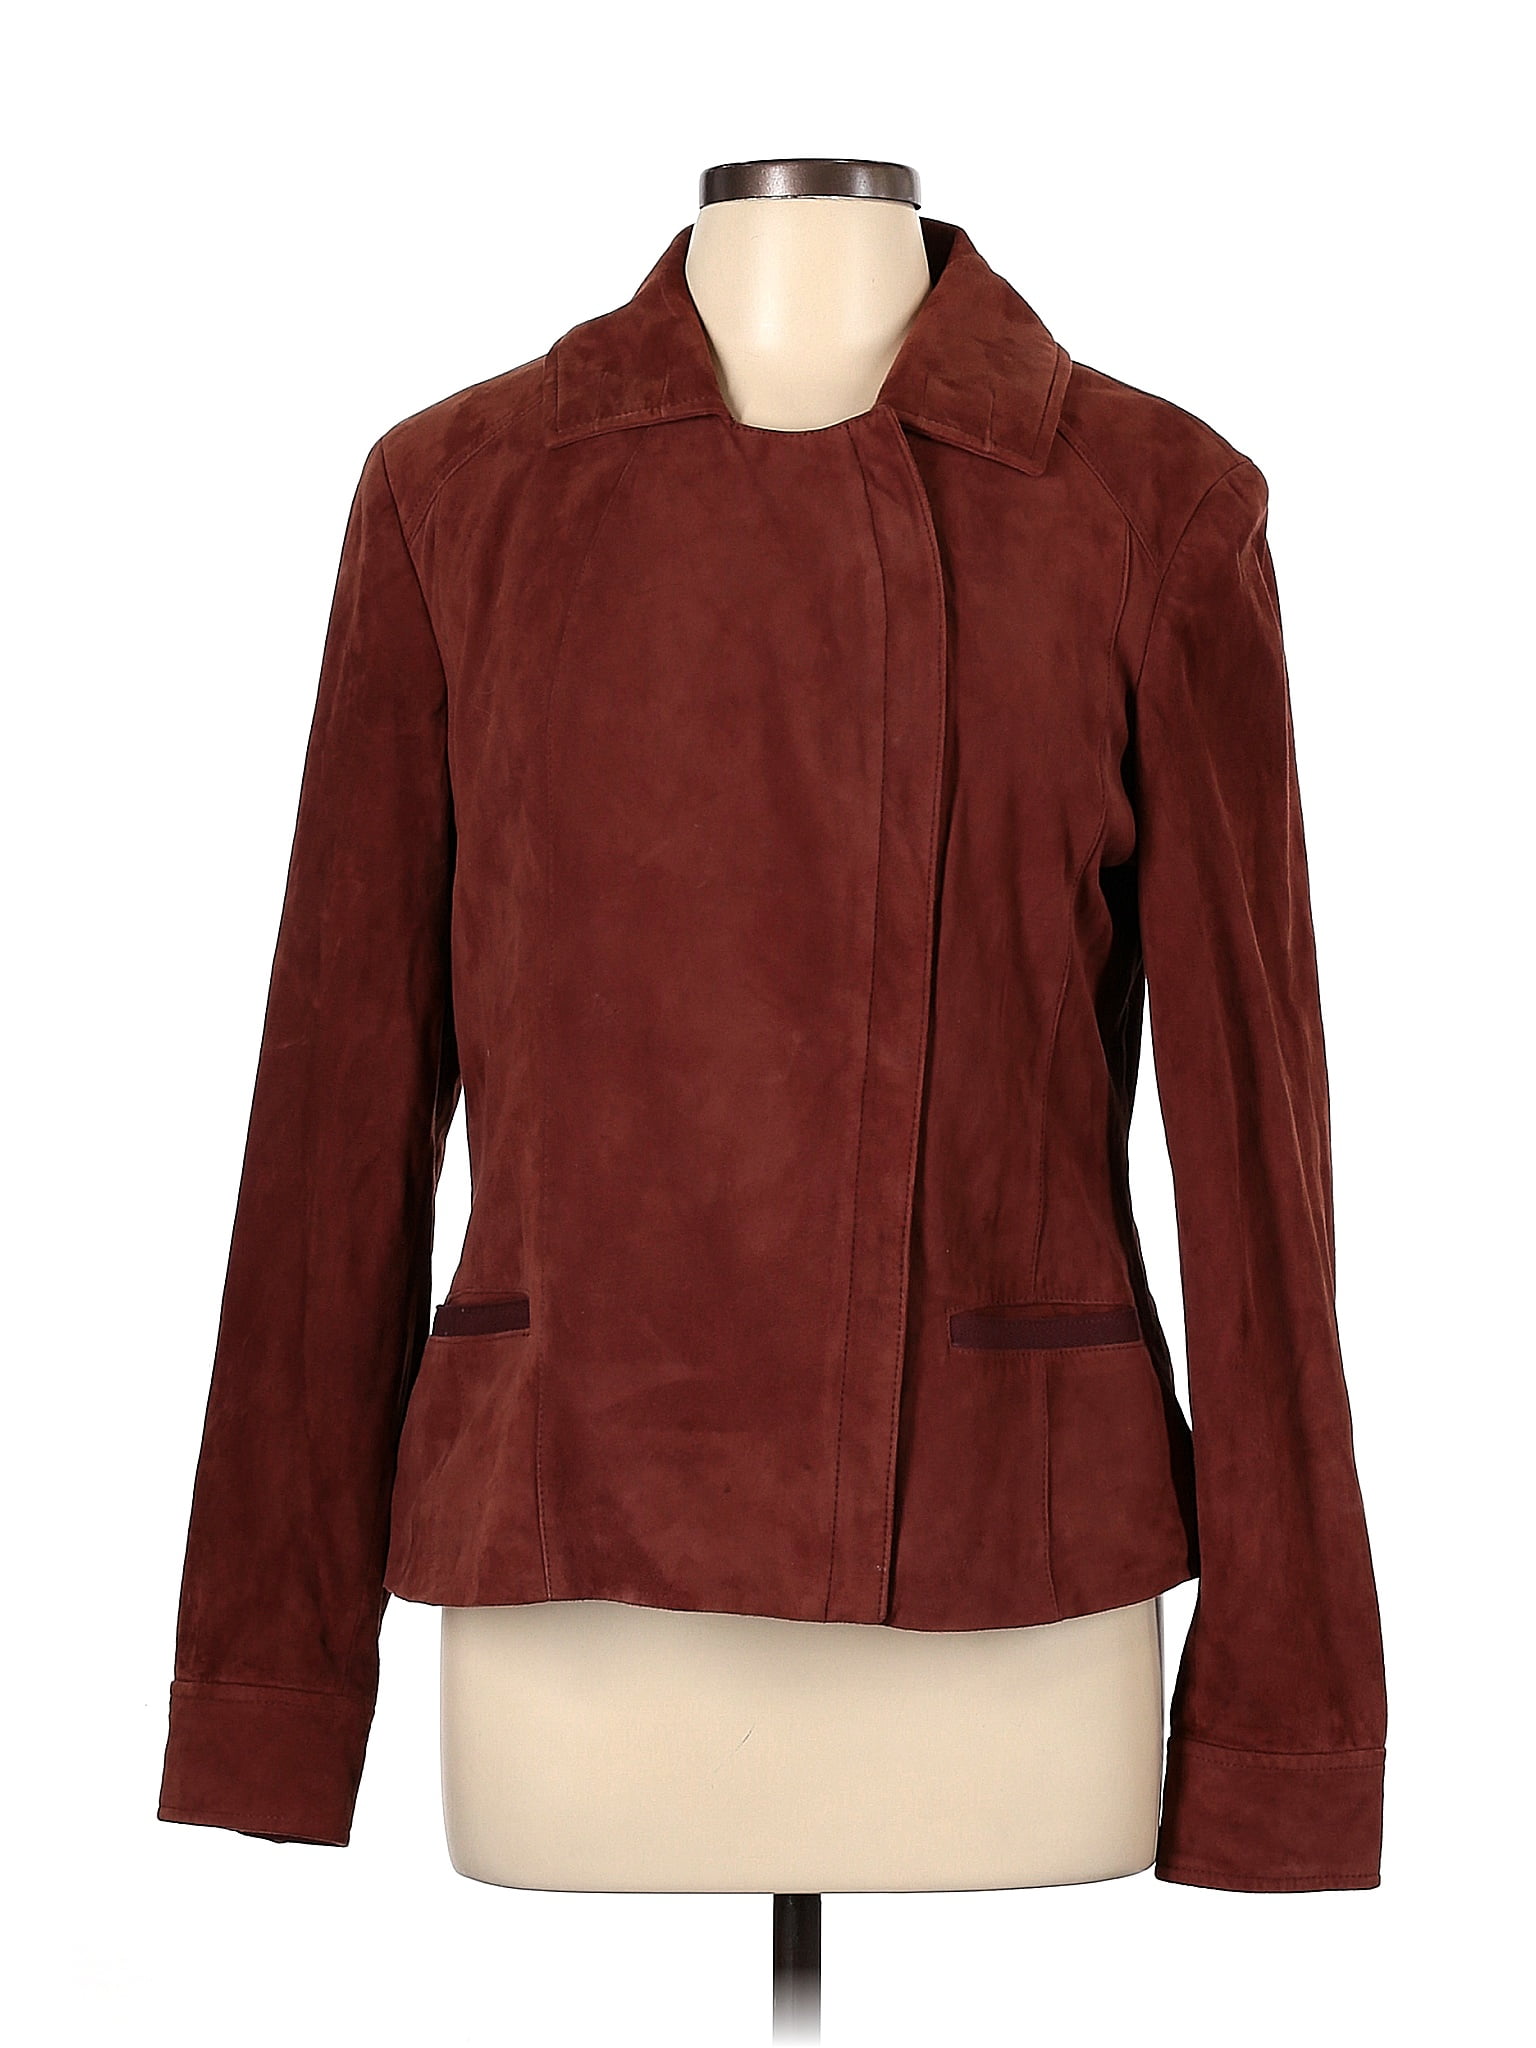 Sundance 100% Leather Solid Brown Burgundy Leather Jacket Size L - 79% ...